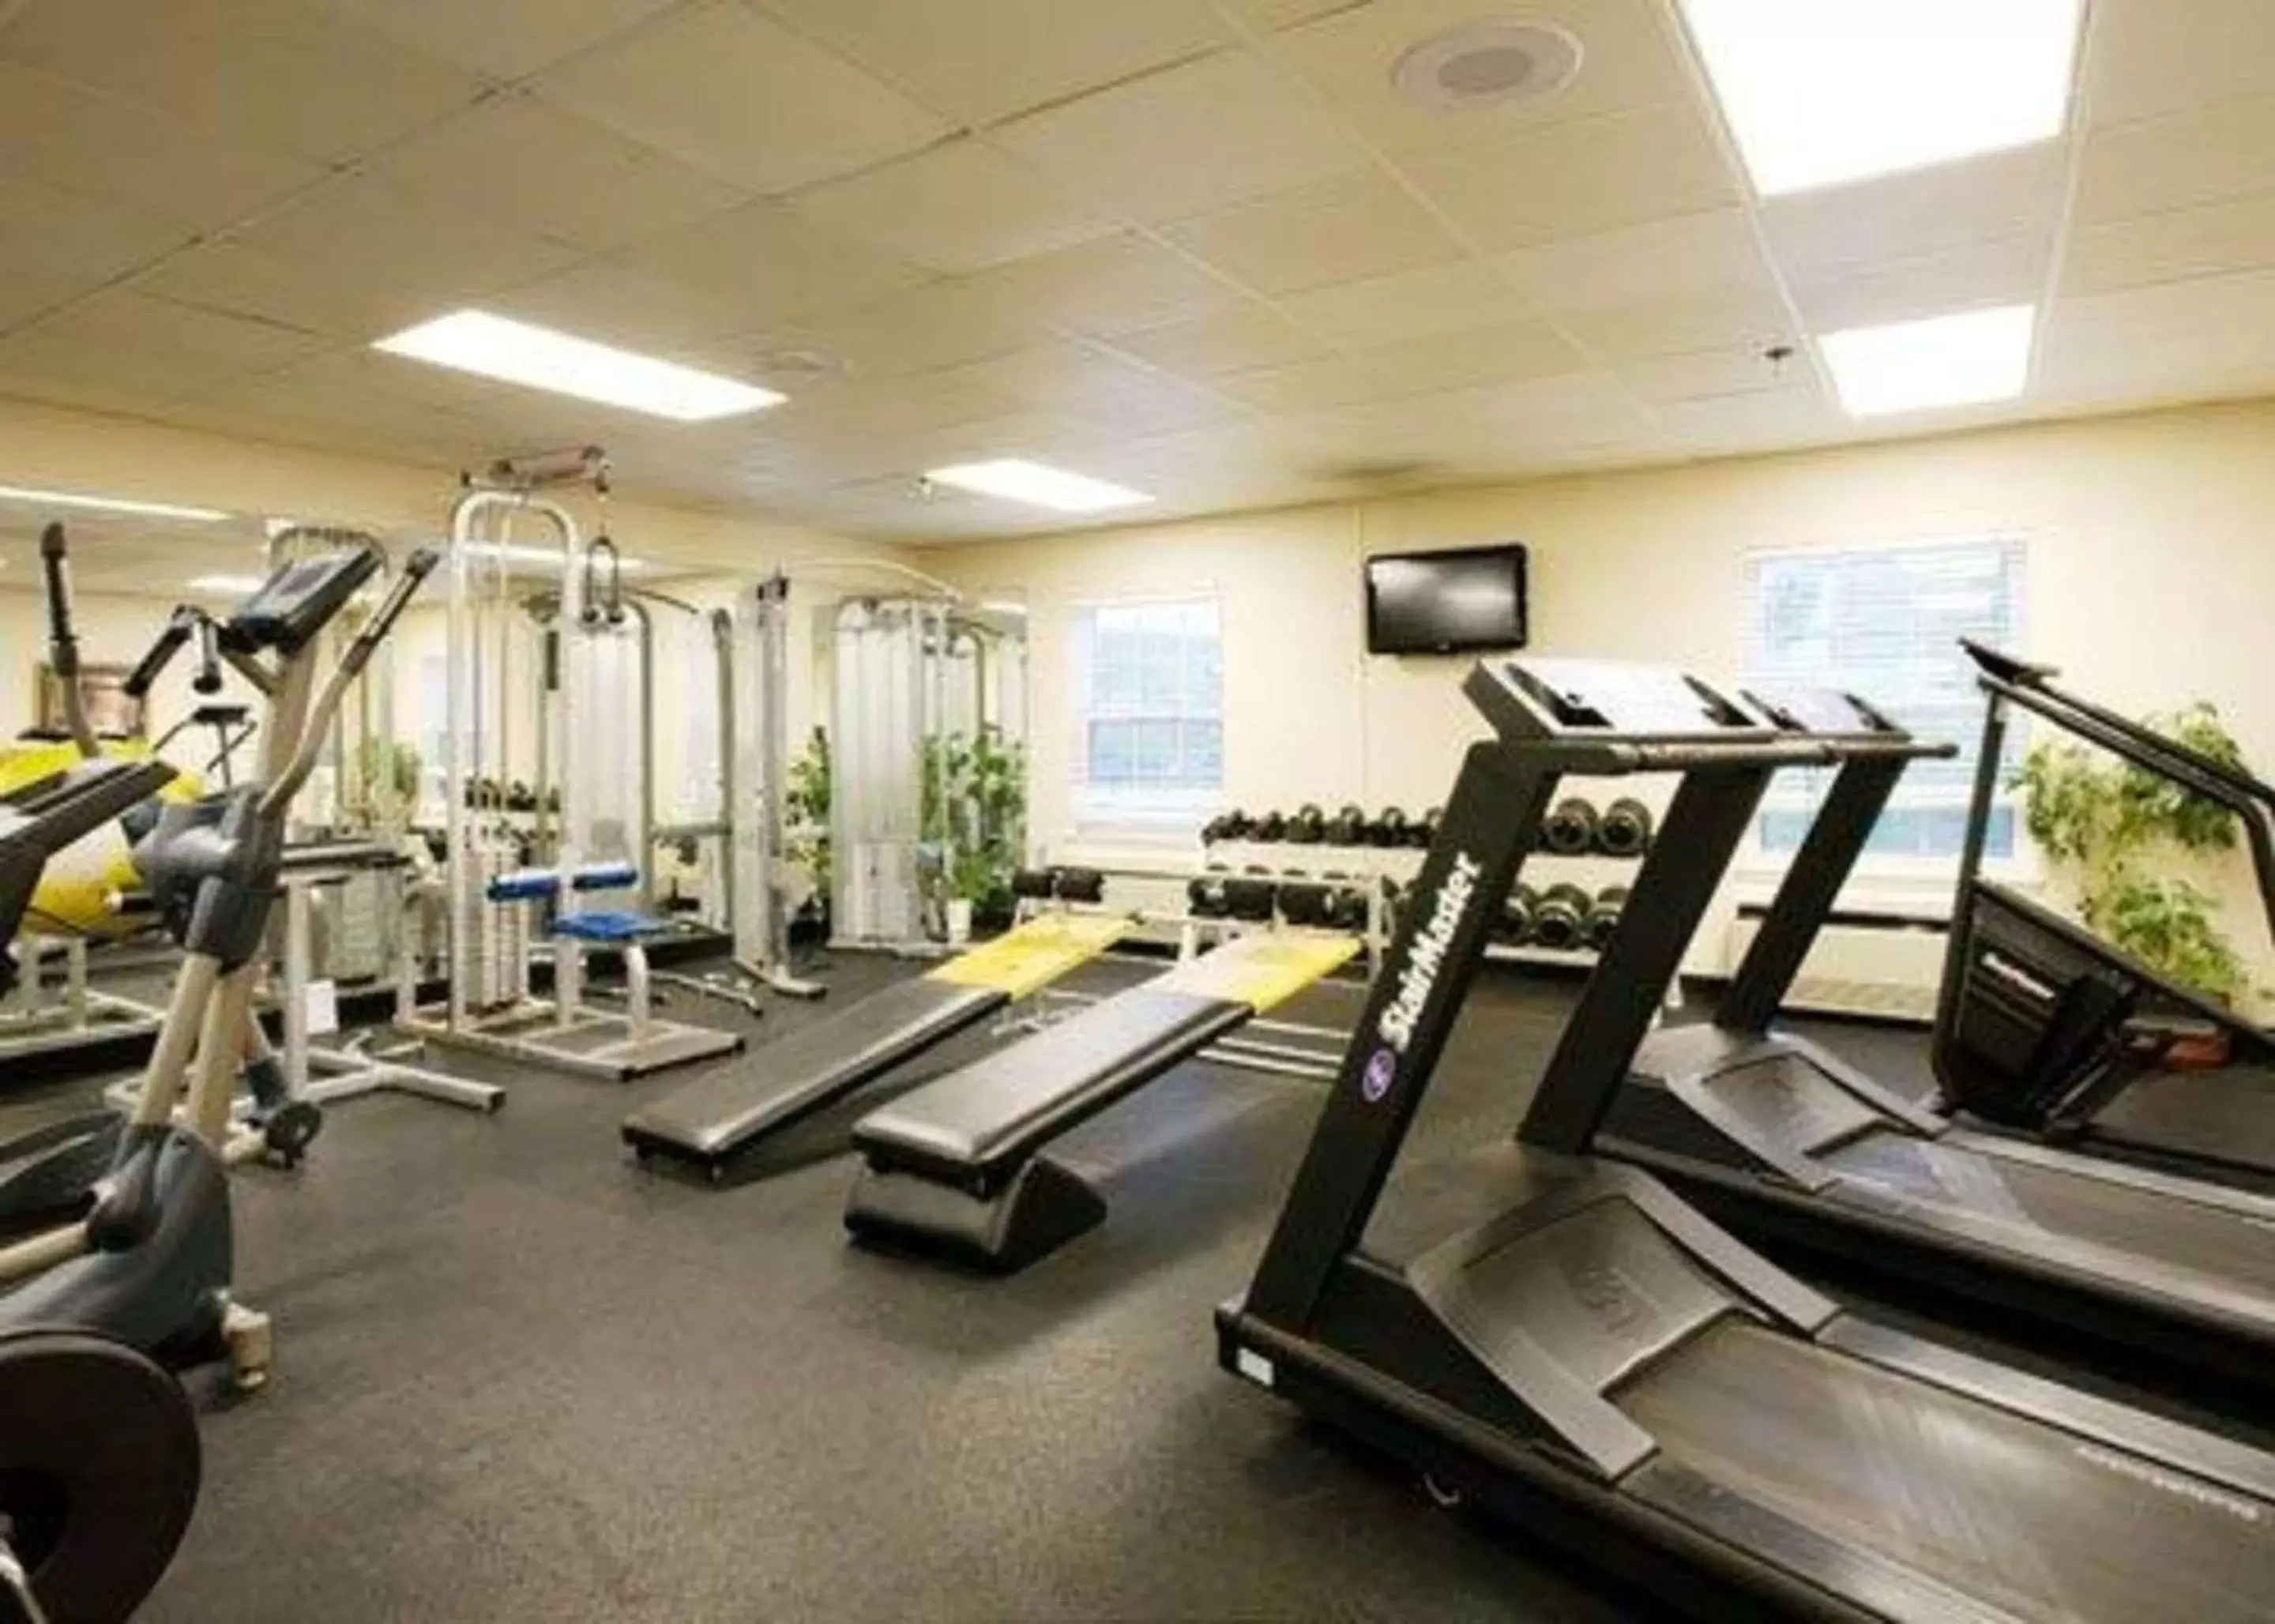 Fitness centre/facilities, Fitness Center/Facilities in Comfort Inn Civic Center